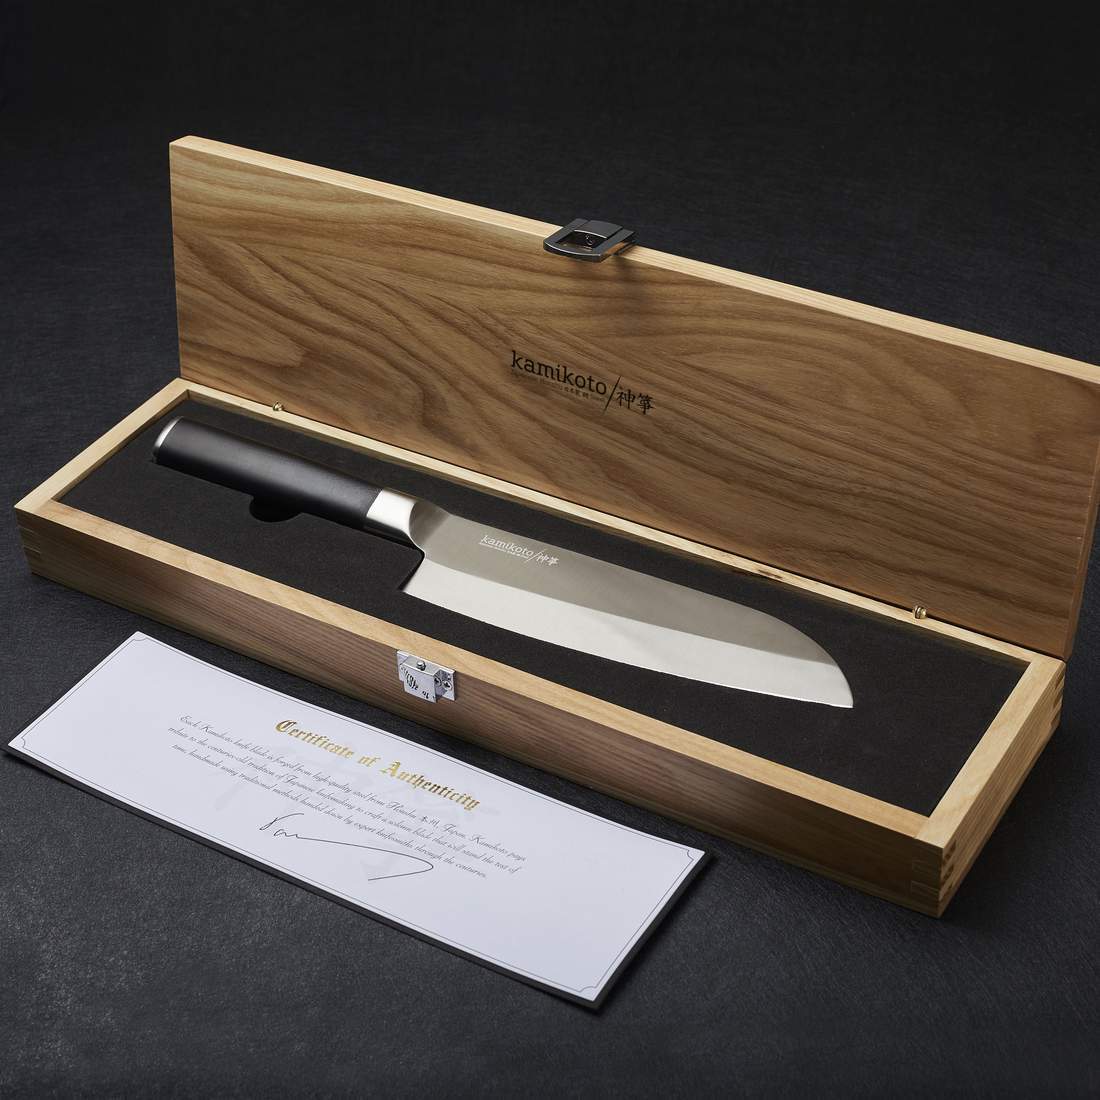  Kamikoto Kuro Series Knife Set : Industrial & Scientific